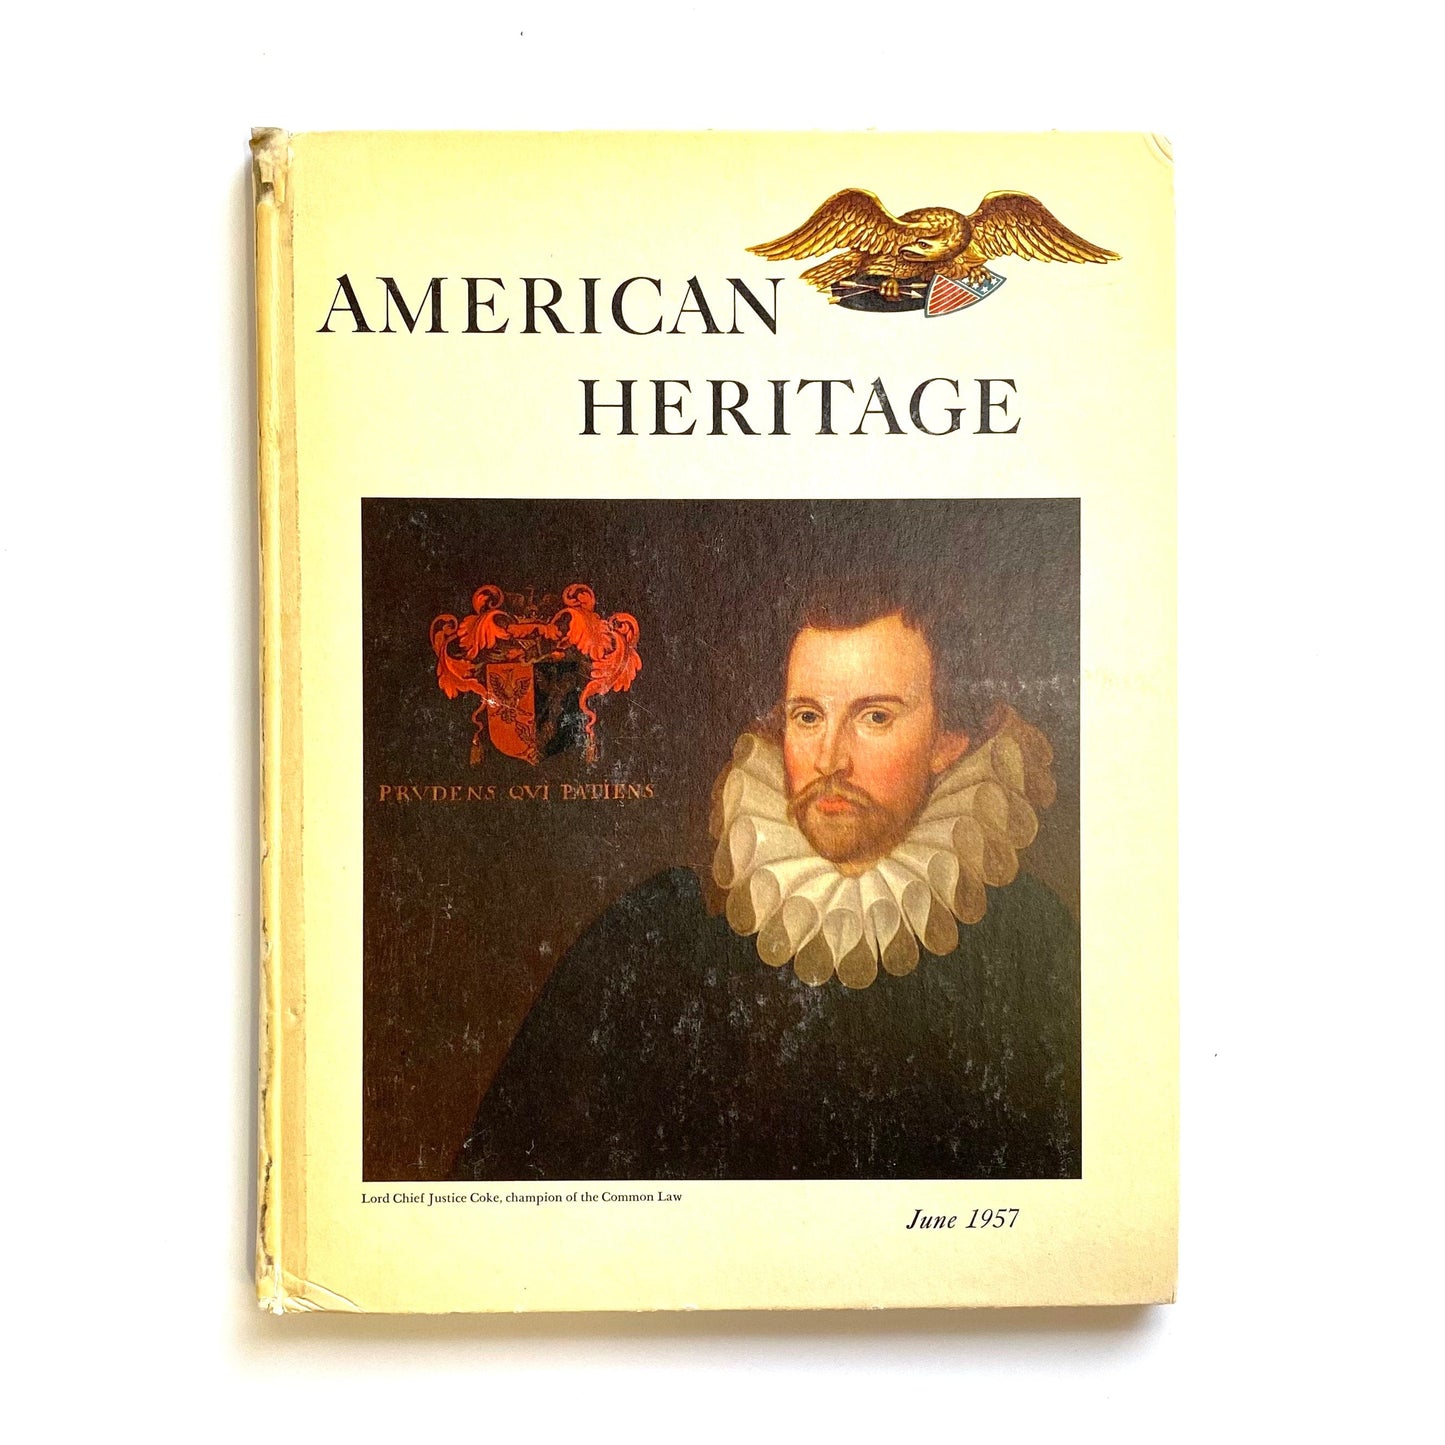 Vintage American Heritage Volume VIII No 4 June 1957 Hardcover History Book